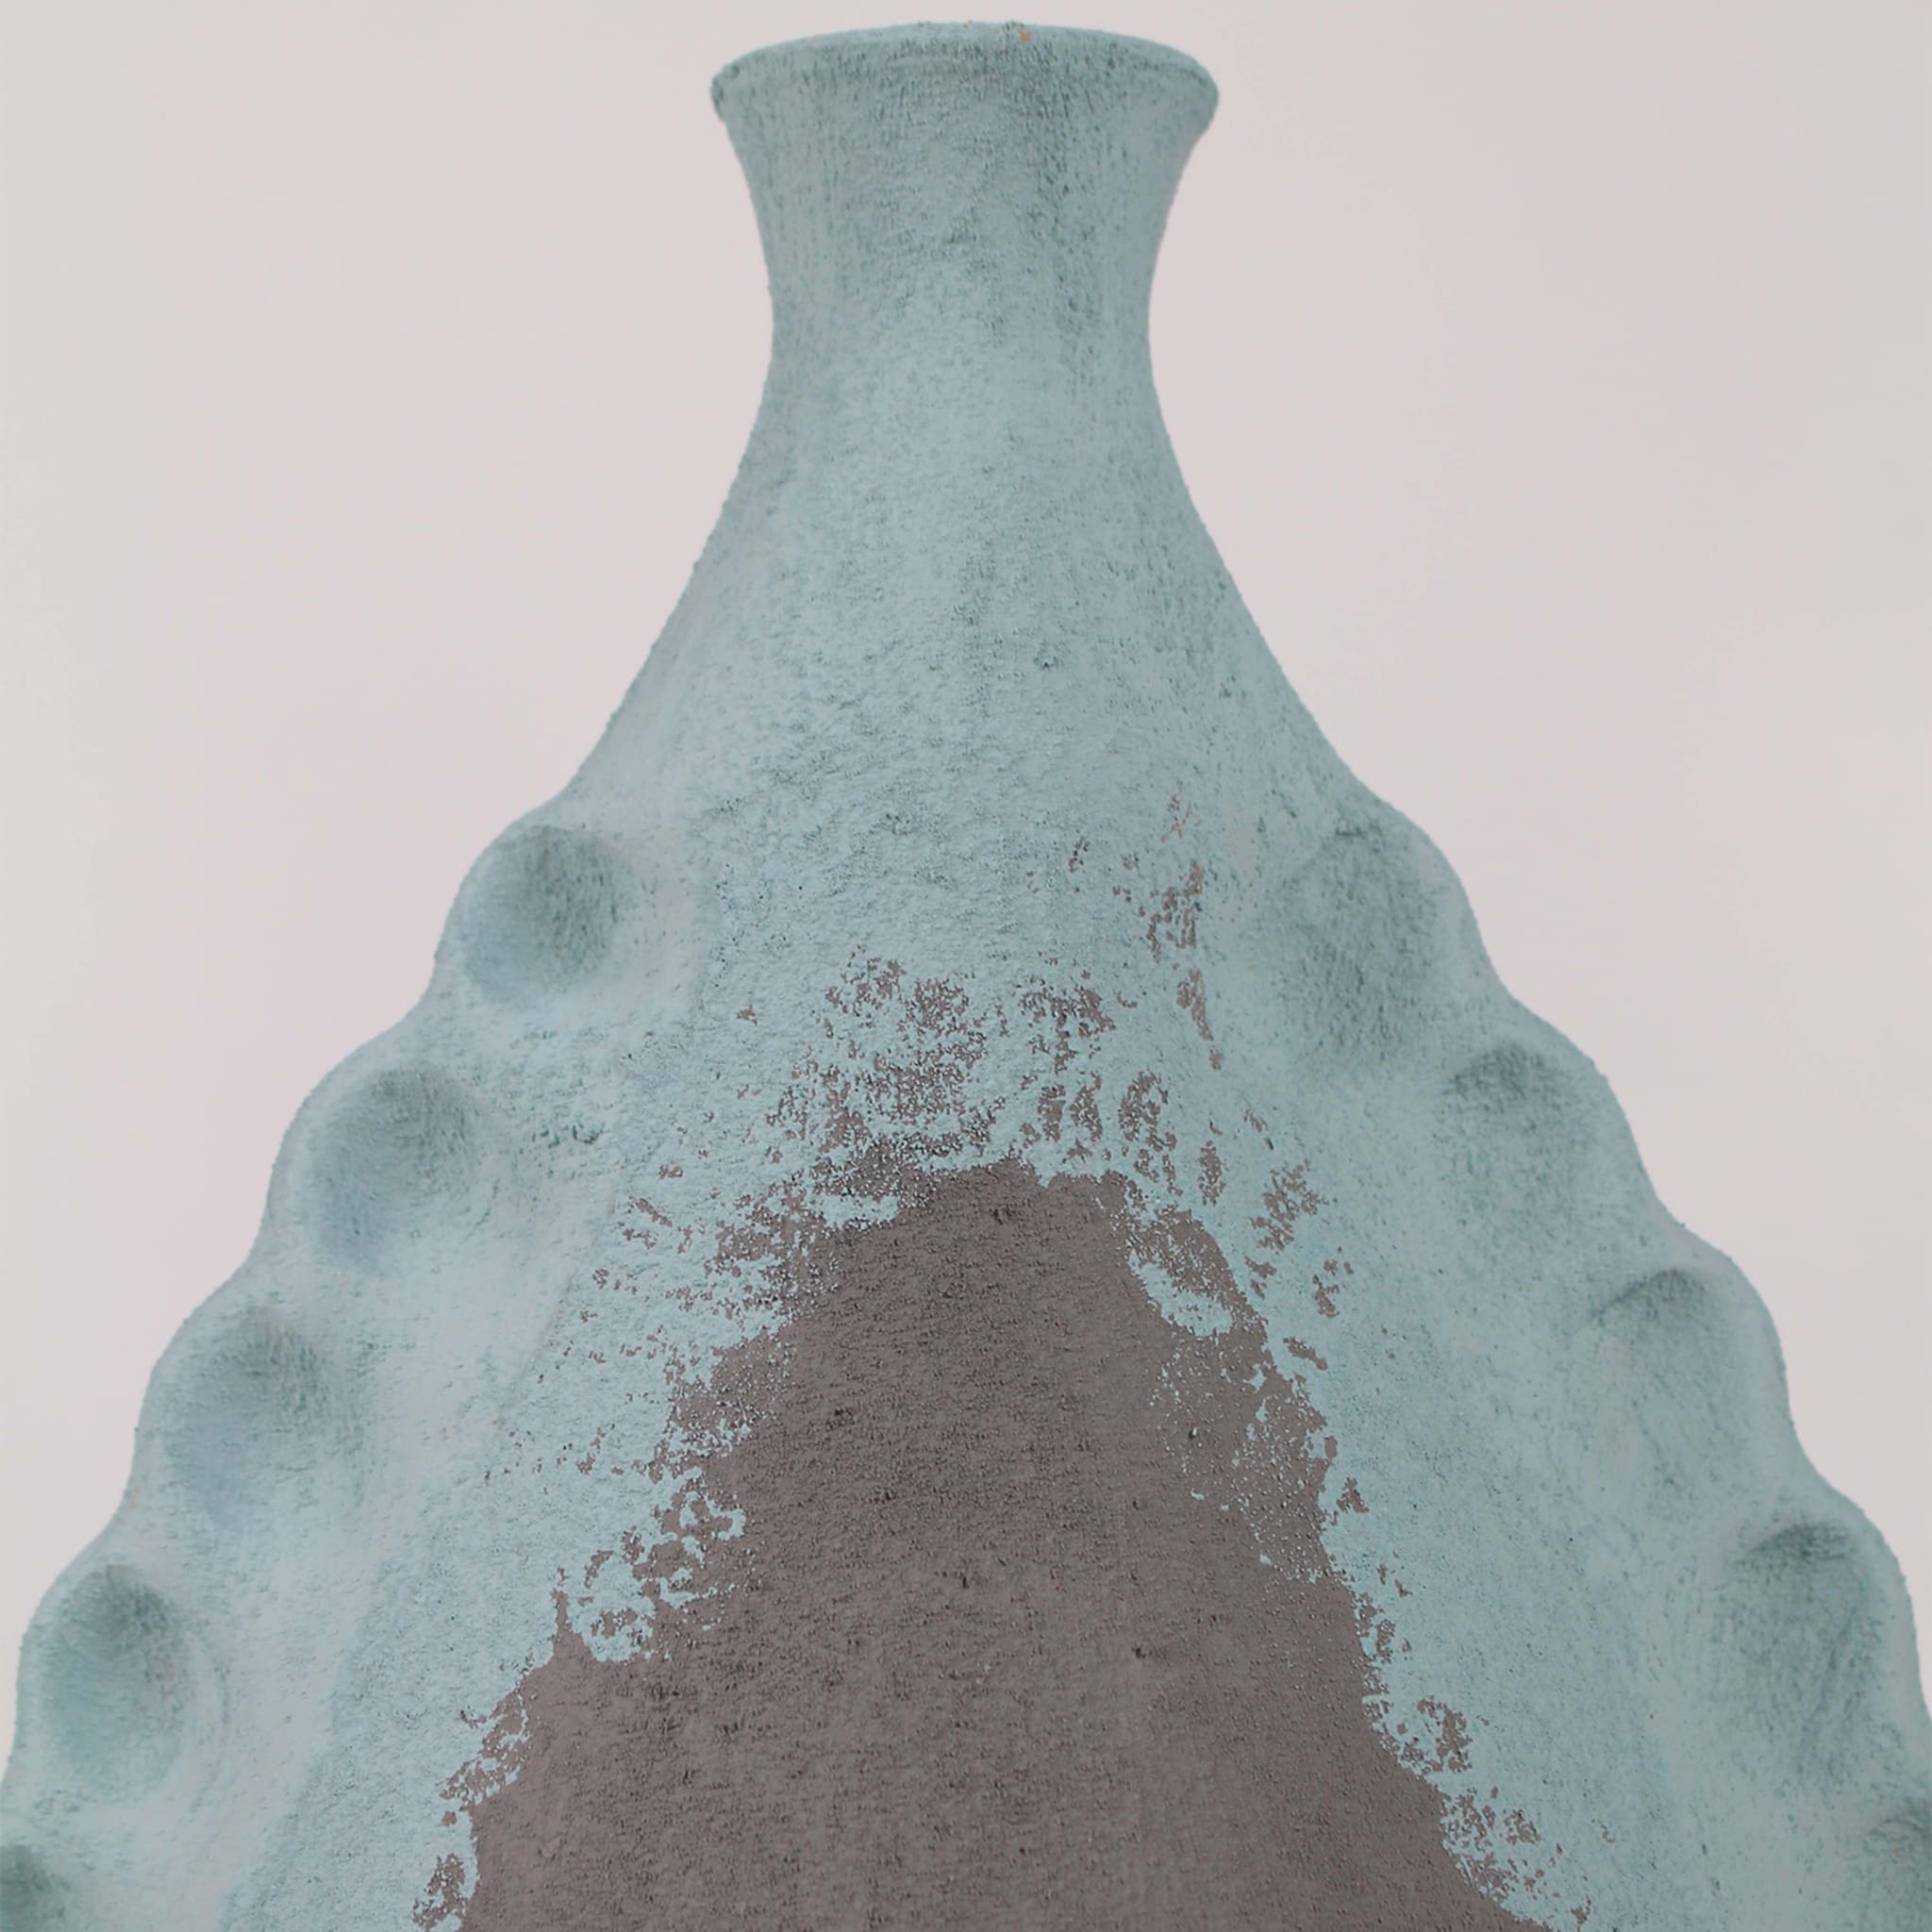 Vase en forme d'amande Azure &amp; Gray 20 par Mascia Meccani - Vue alternative 3